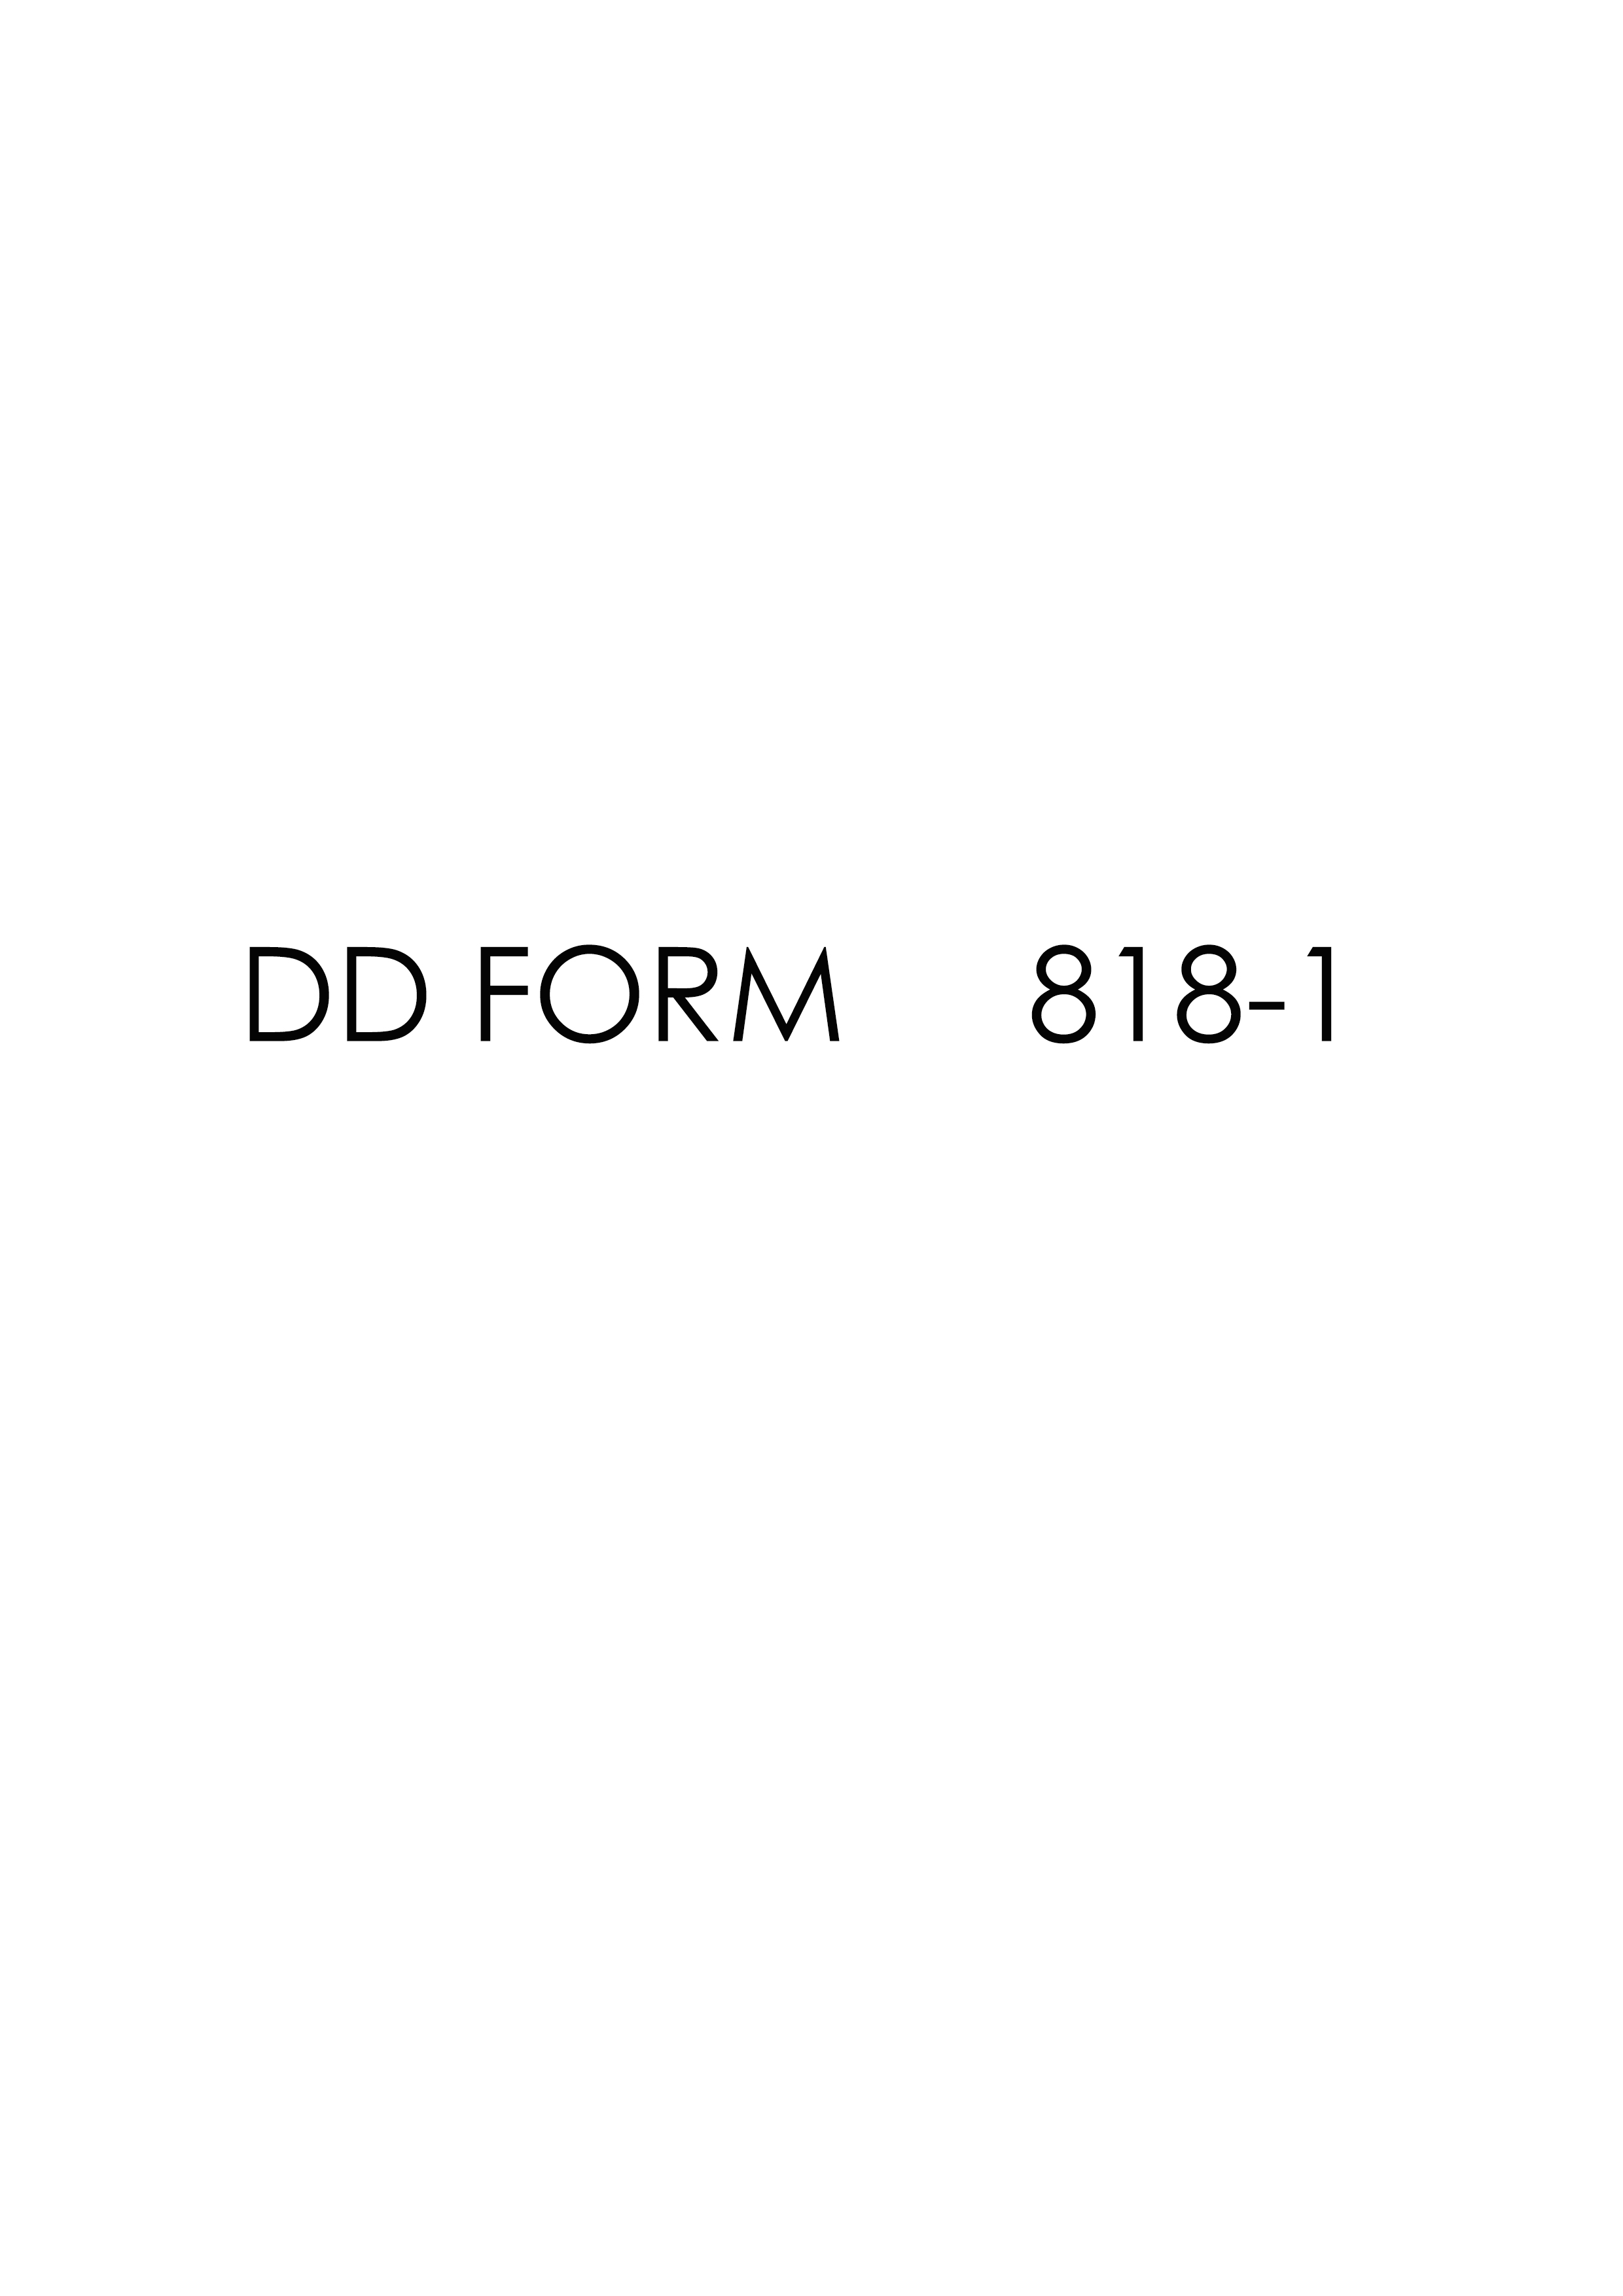 Download dd Form 818-1